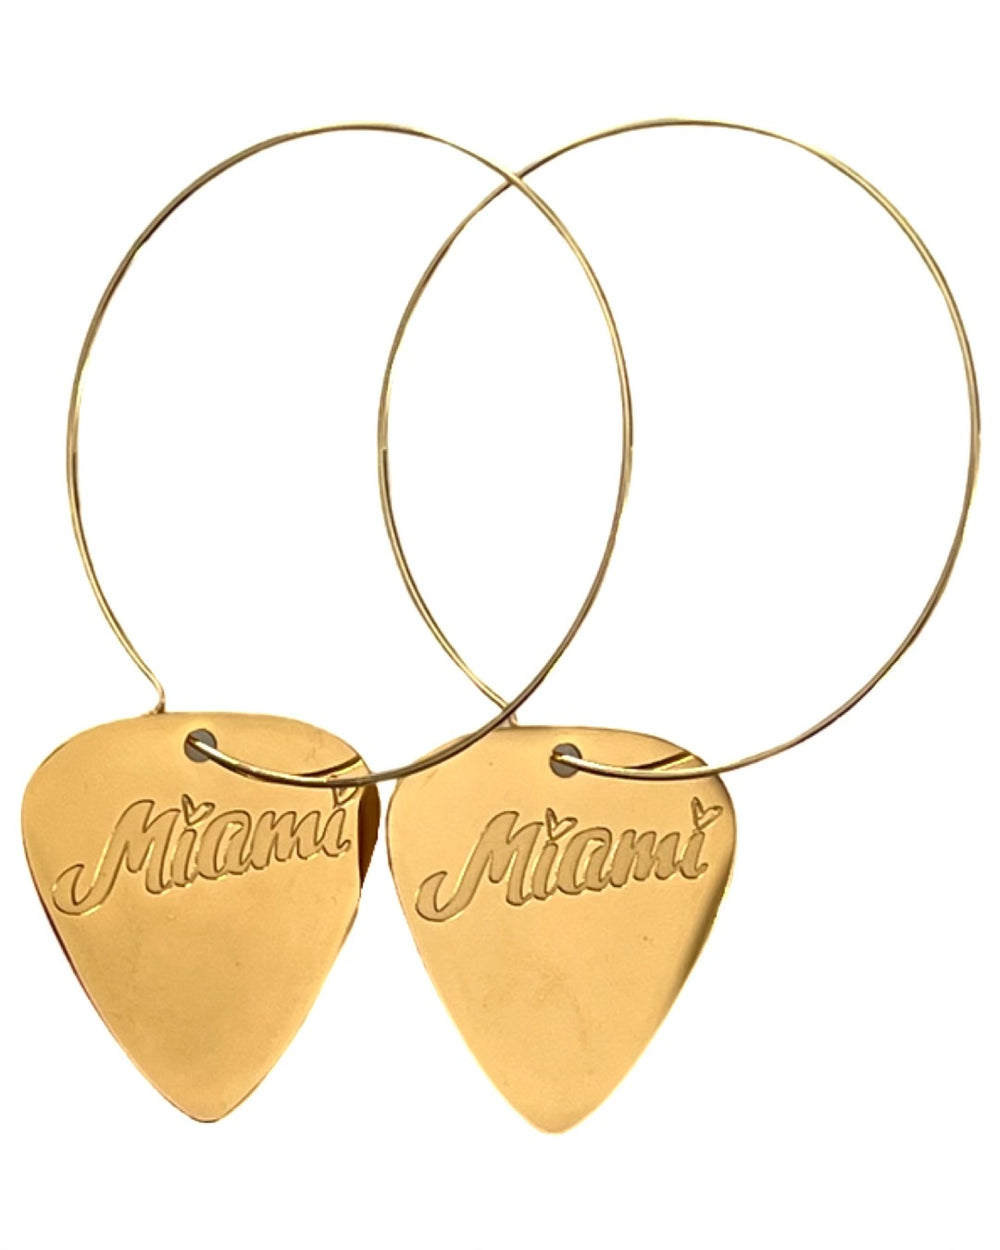 WS Miami Gold Reversible Single Guitar Pick Earrings